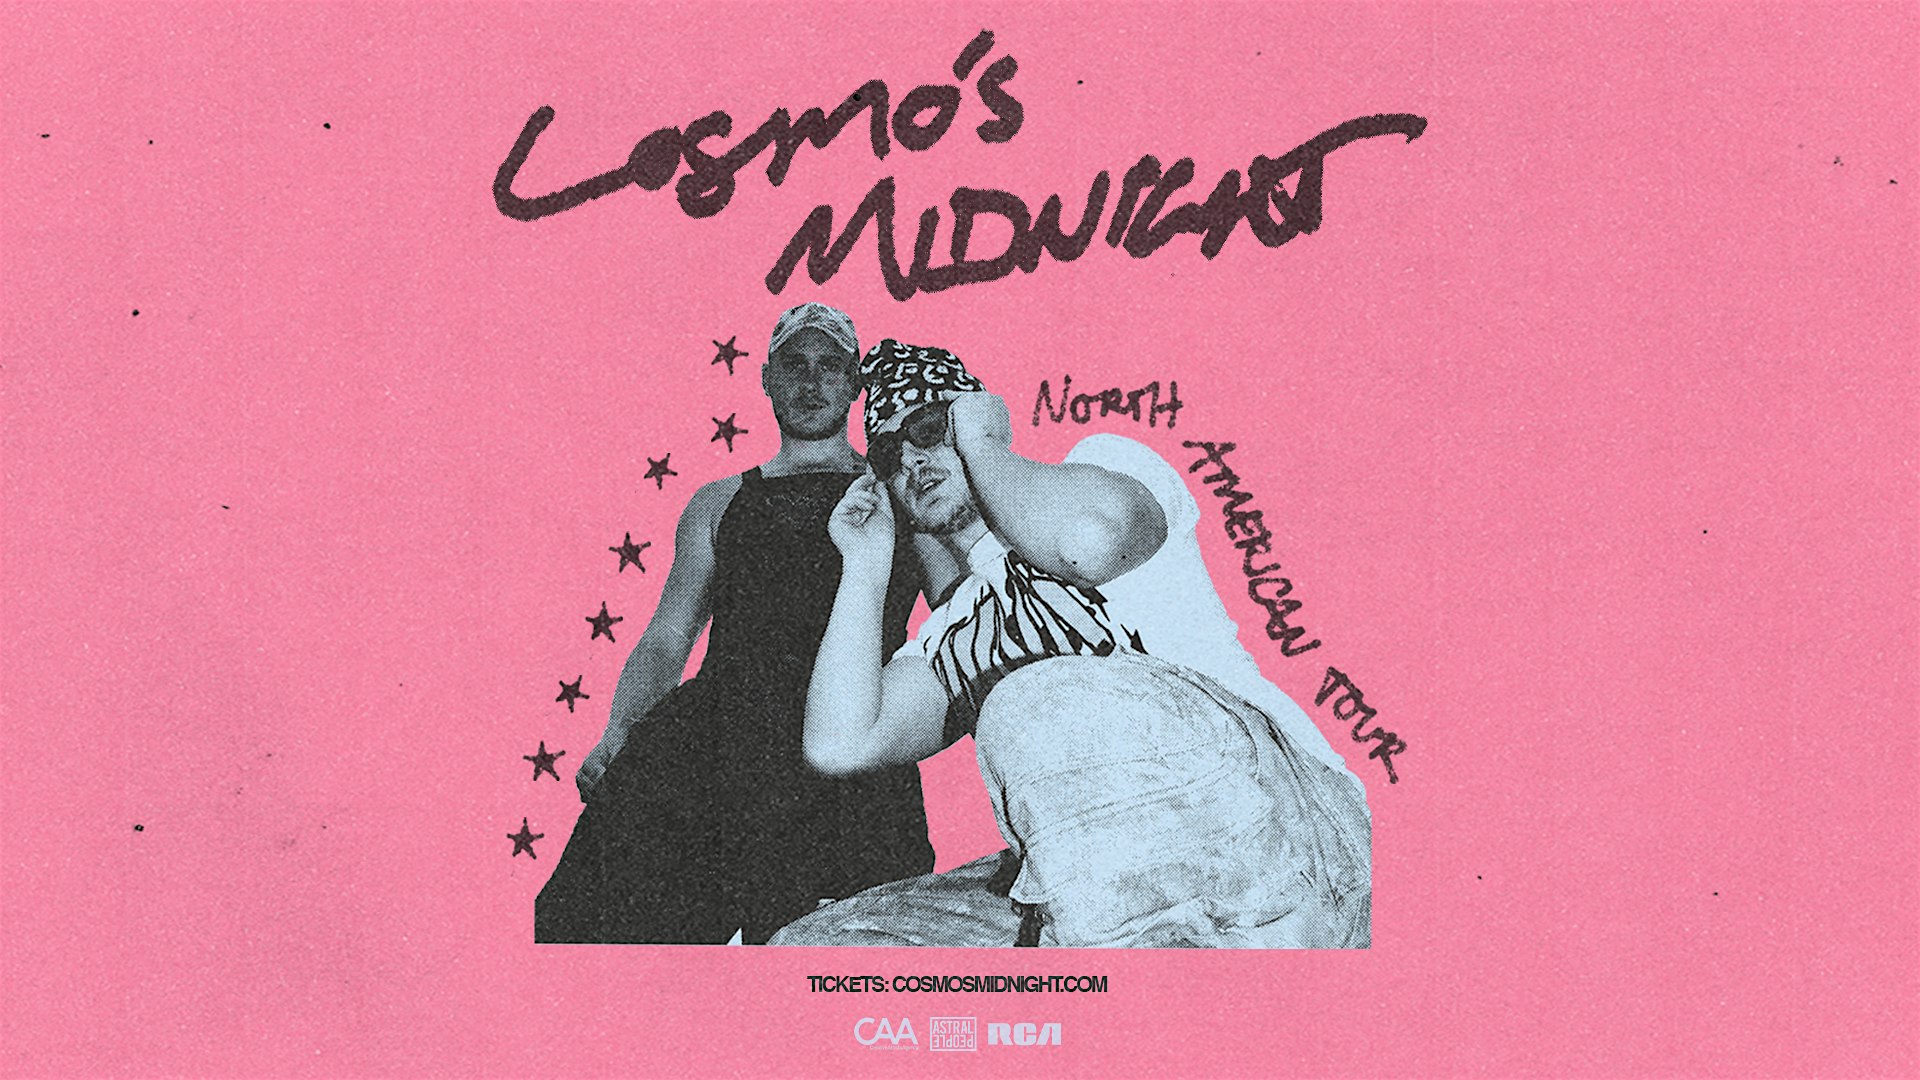 Cosmo’s Midnight